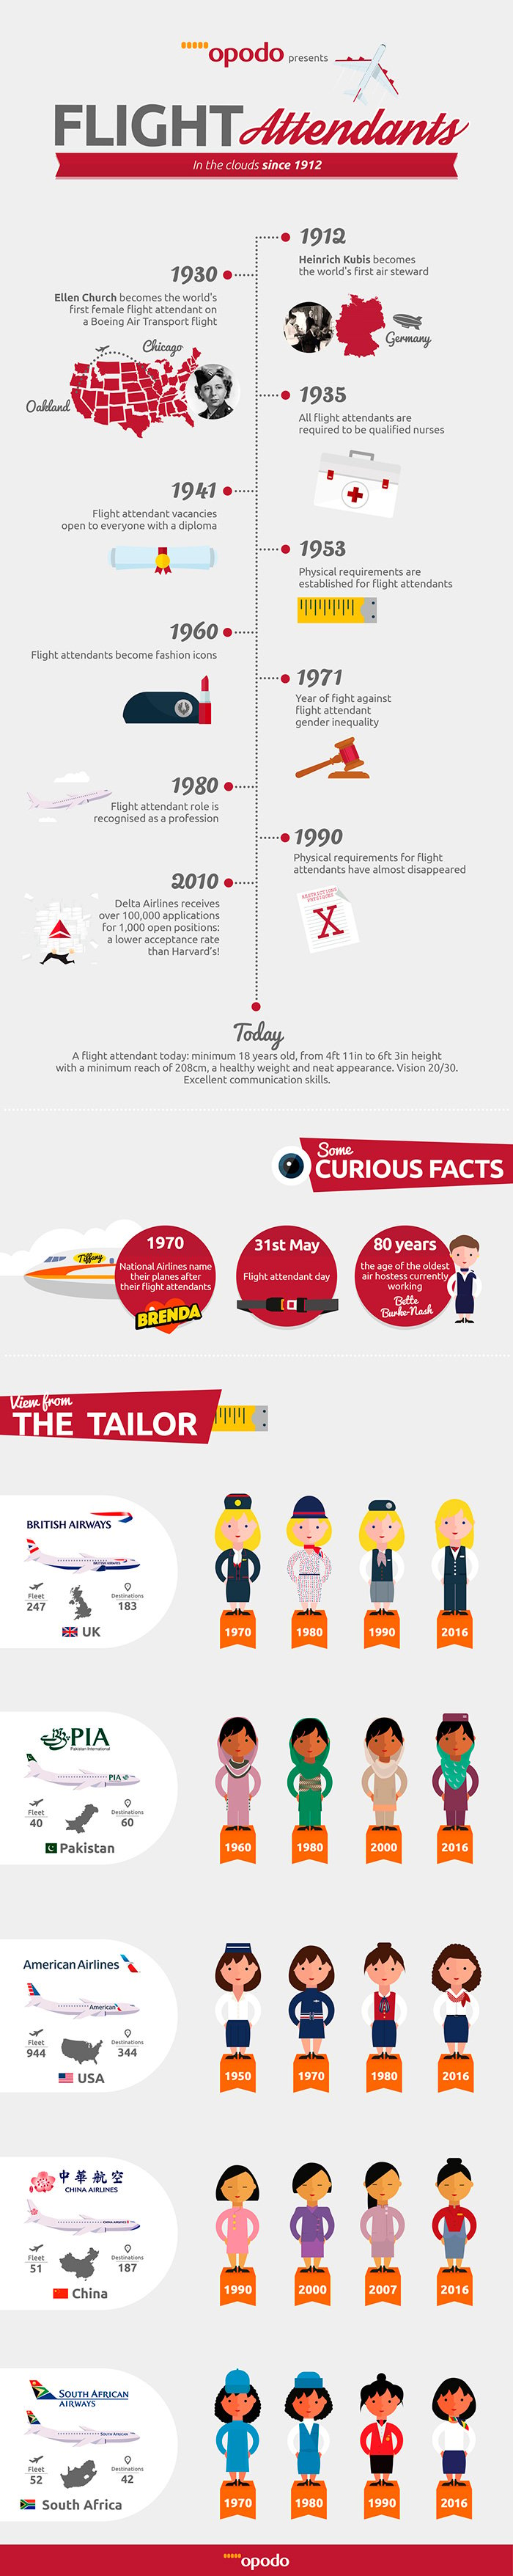 Flight attendants infographic